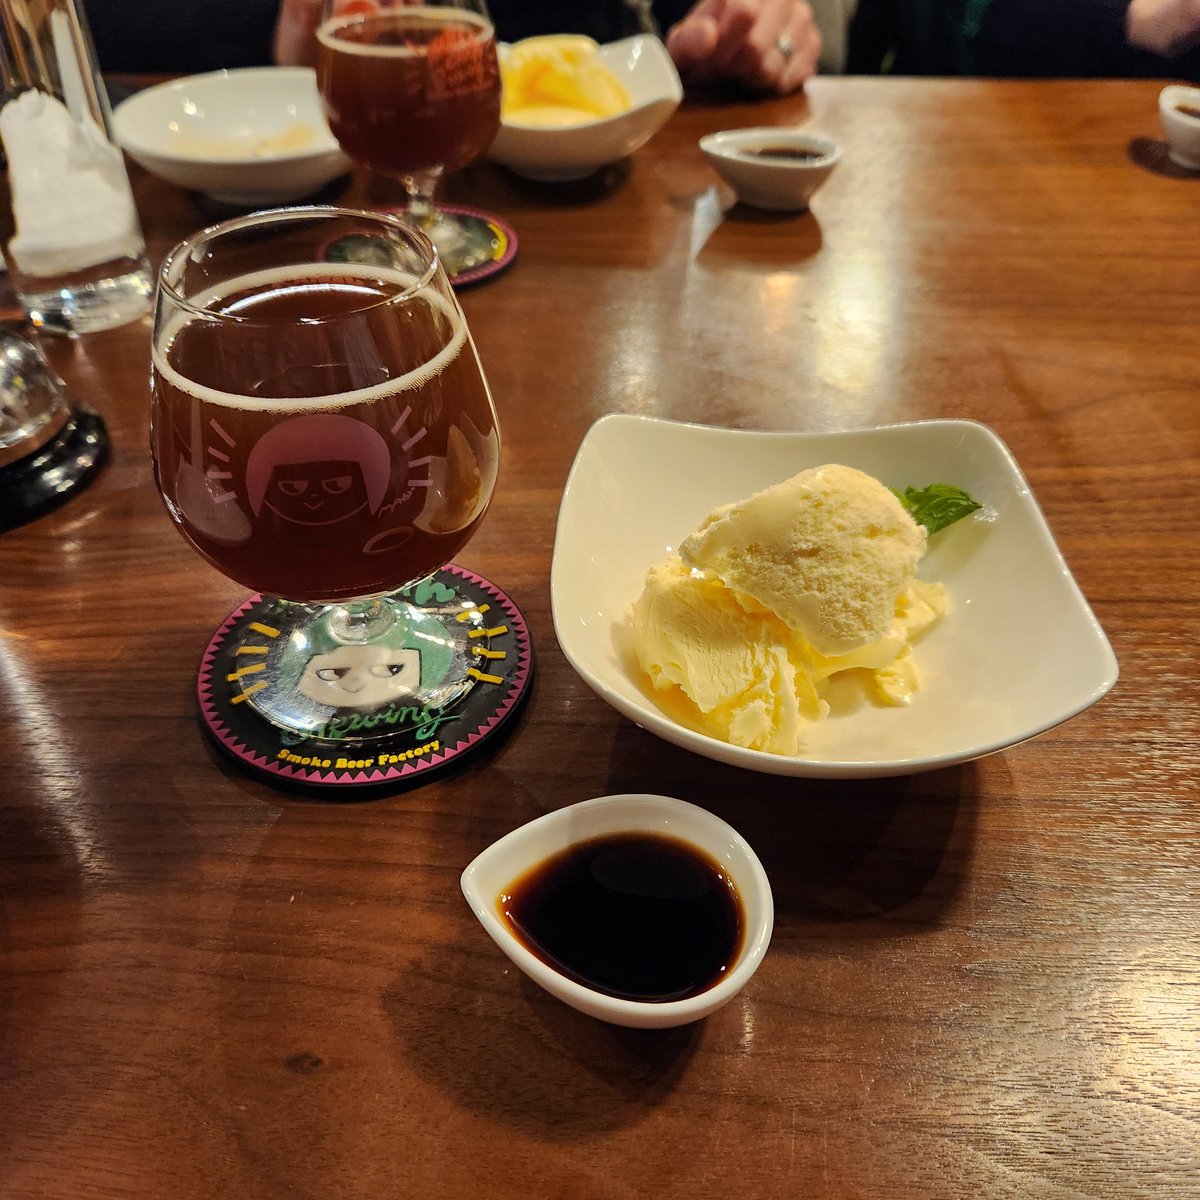 『Barrelaged Scotch Ale』ABV 8%
#TOKYOALEWORKS
#NAMACHAんBrewing 
バーボン樽で一年かけて熟成させたビールと言ったら絶対うまいやつ～‼️そして燻製チョコかけバニラアイス🍨とバッチリ合う👍ジム友も驚くうまさ😊クラフトビールを気に入っていただけたようだ😙